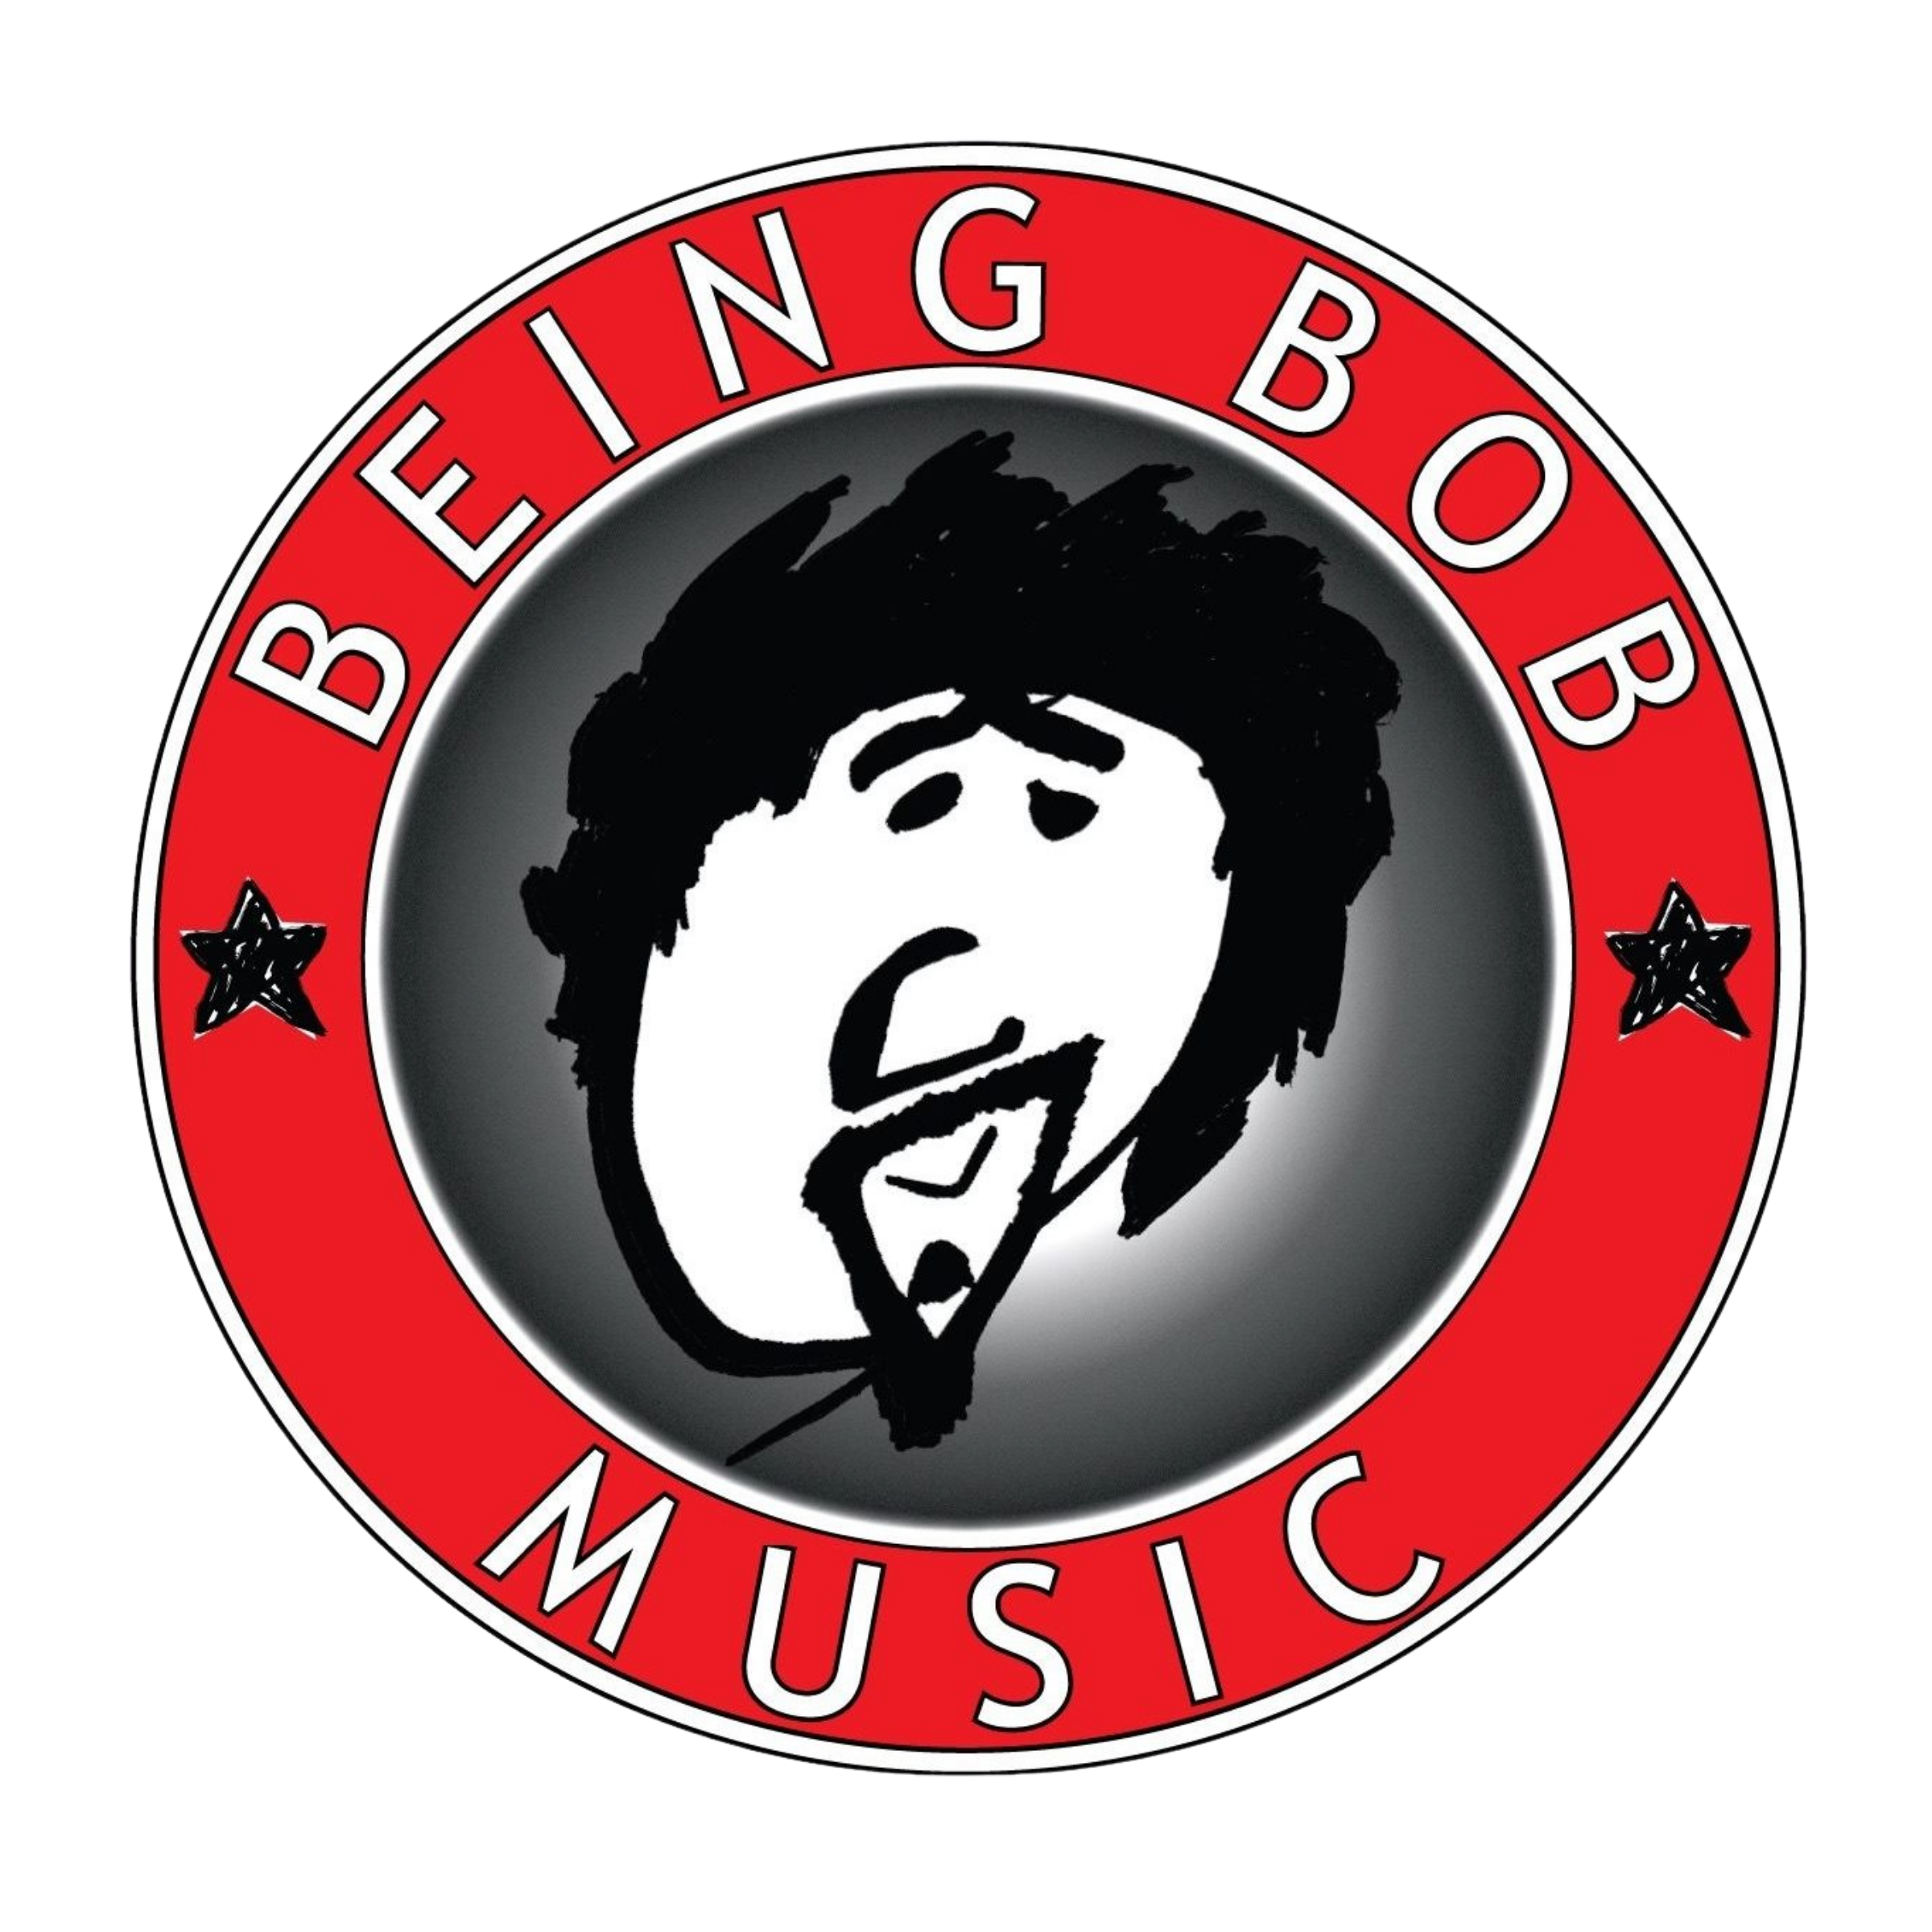 Being Bob Music